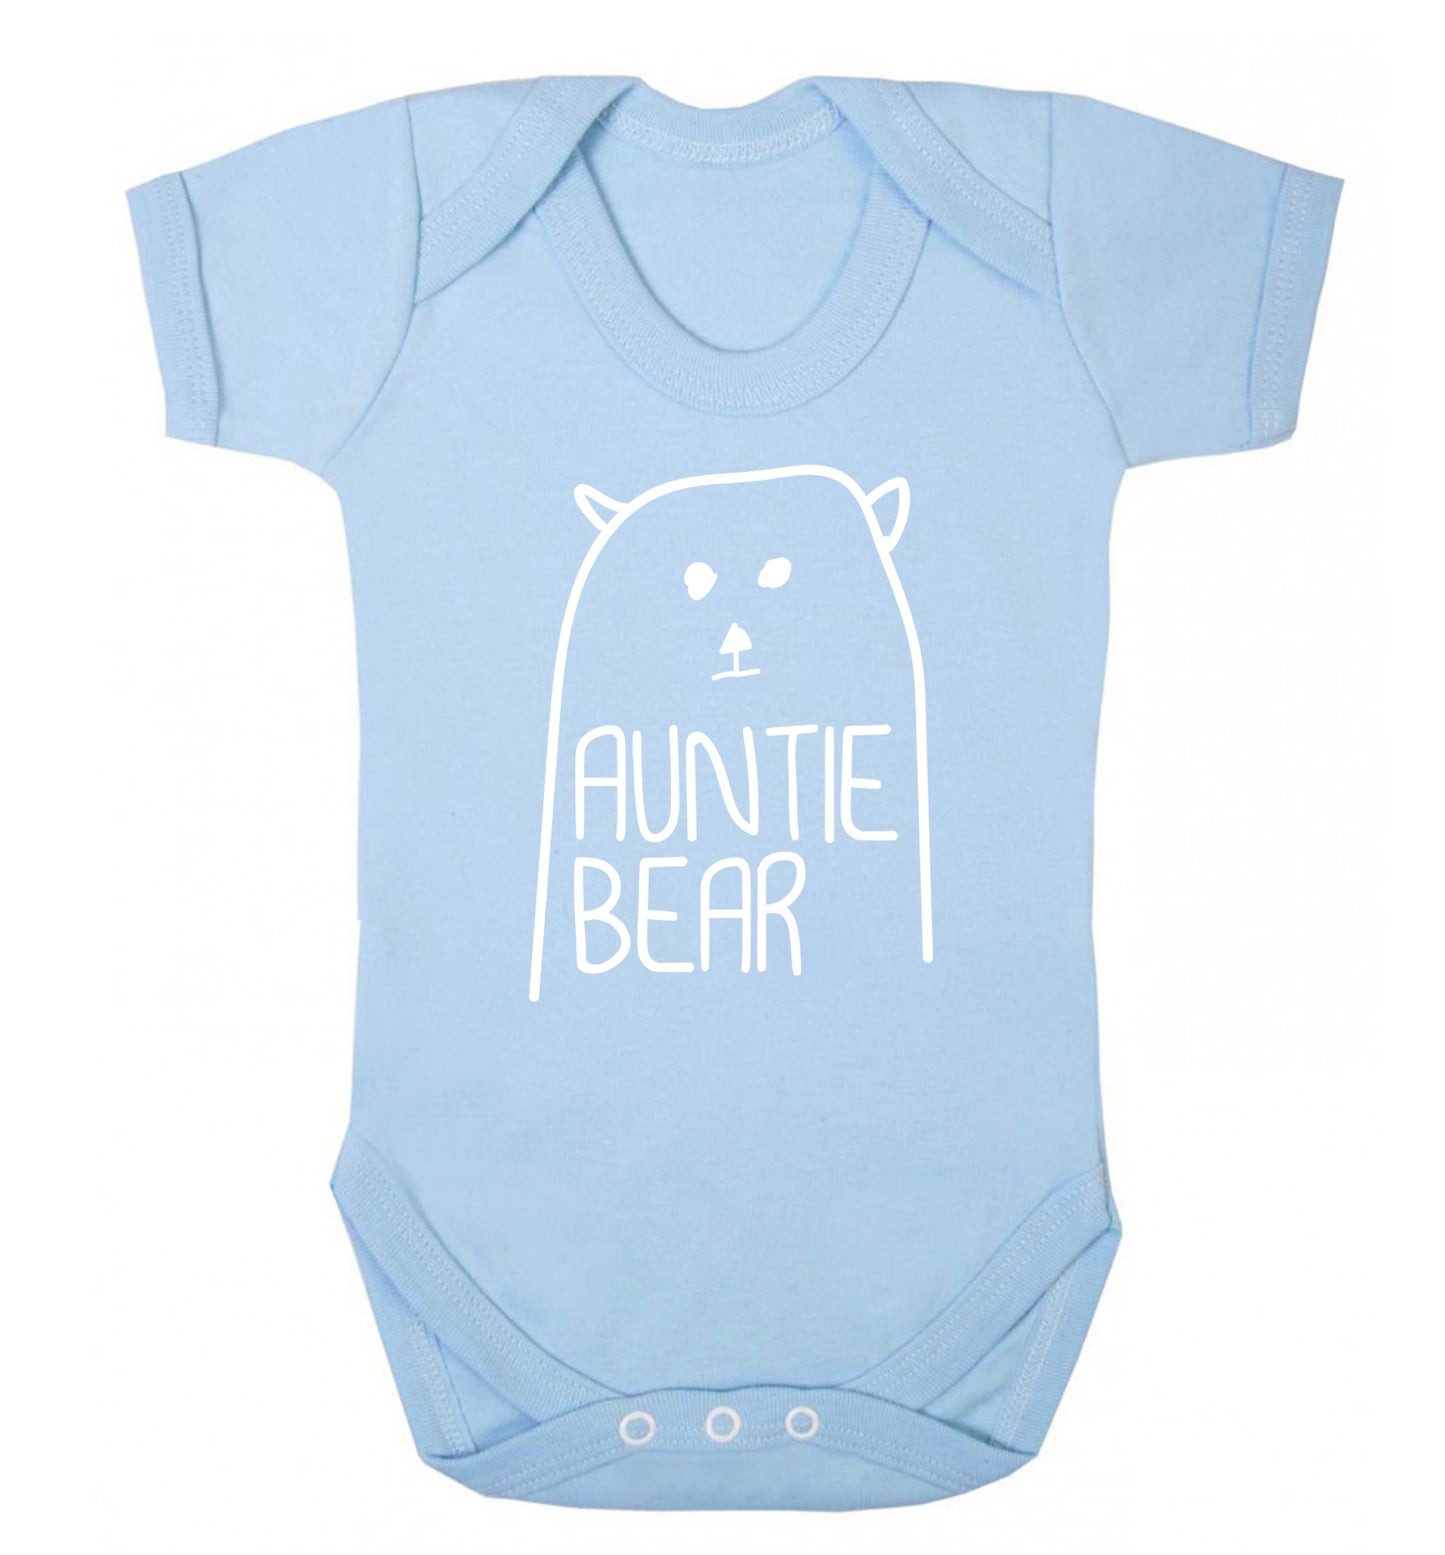 Auntie bear Baby Vest pale blue 18-24 months